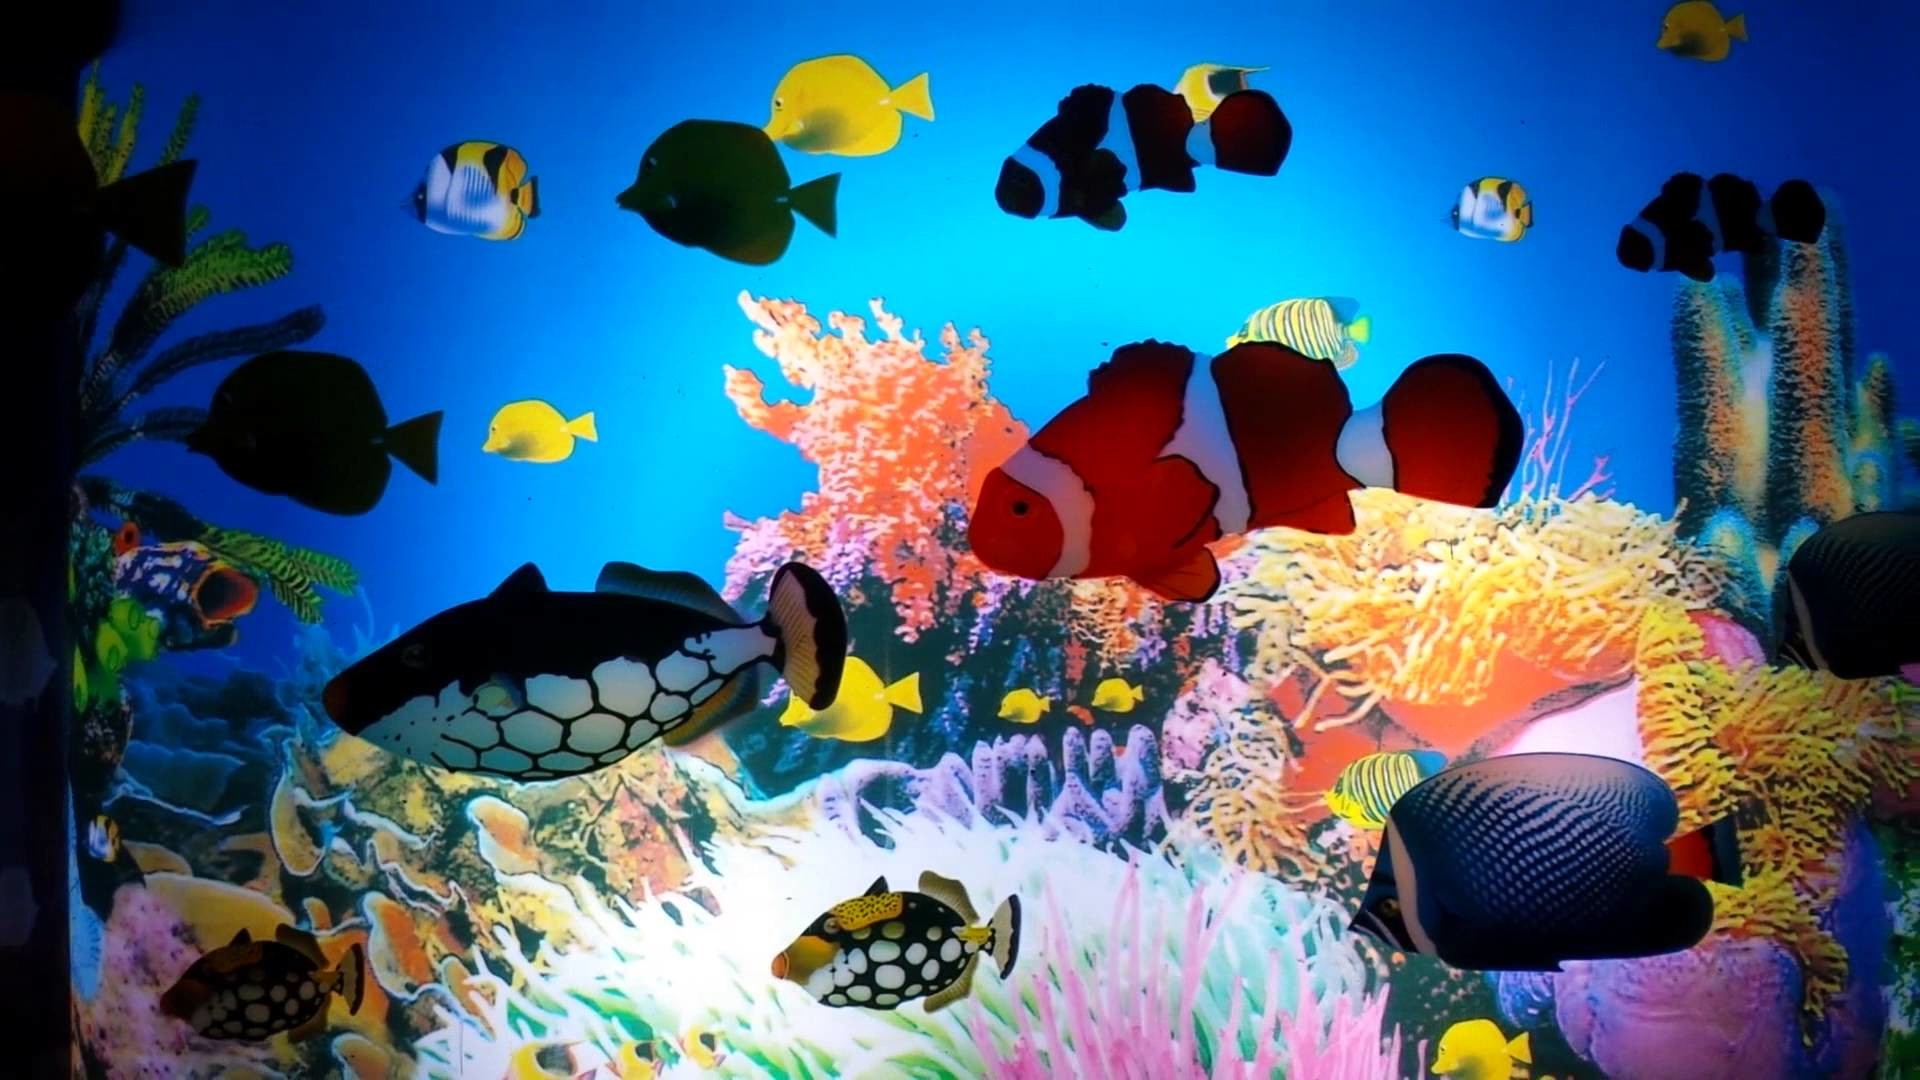 moving aquarium wallpaper,marine biology,coral reef,underwater,coral reef fish,natural environment